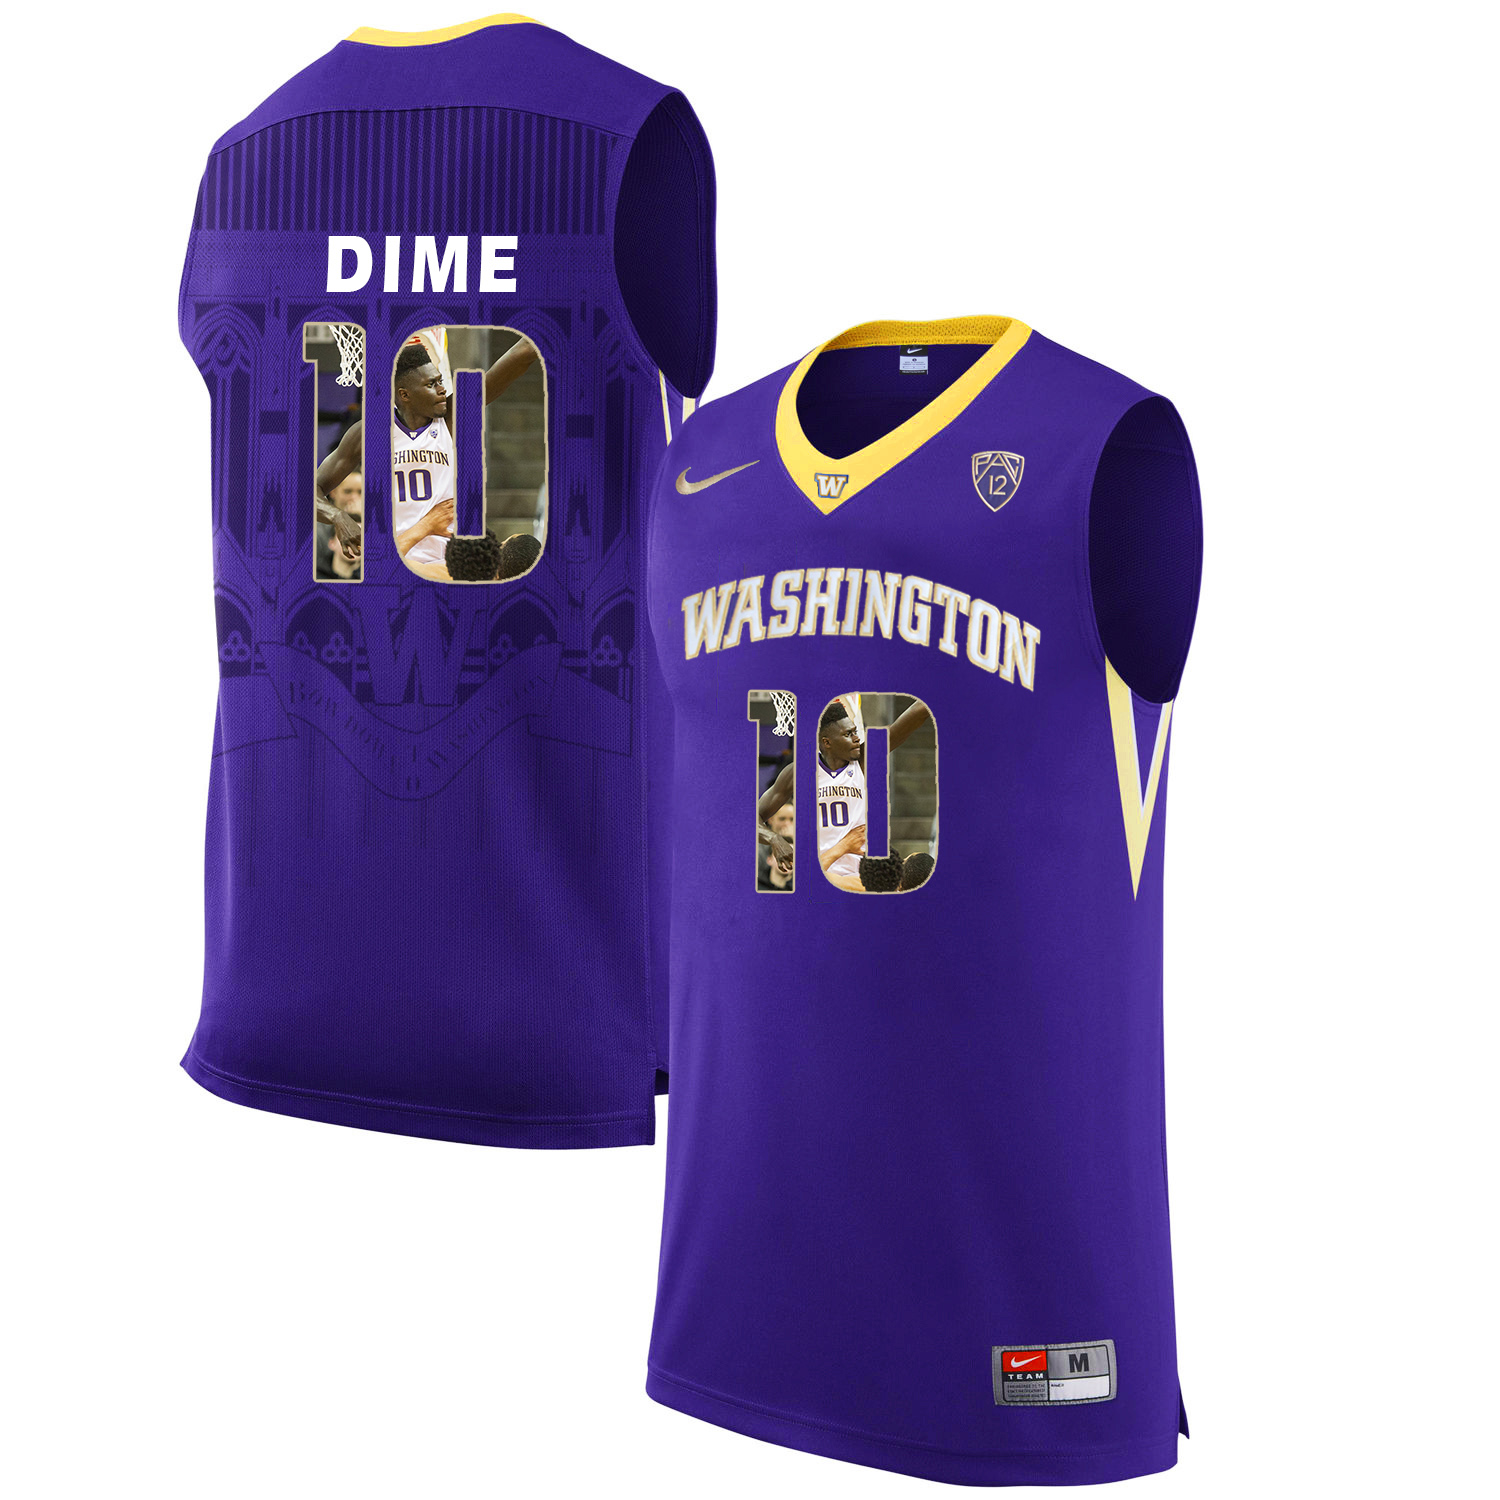 Washington Huskies 10 DIME Purple With Portait College Basketball Jersey